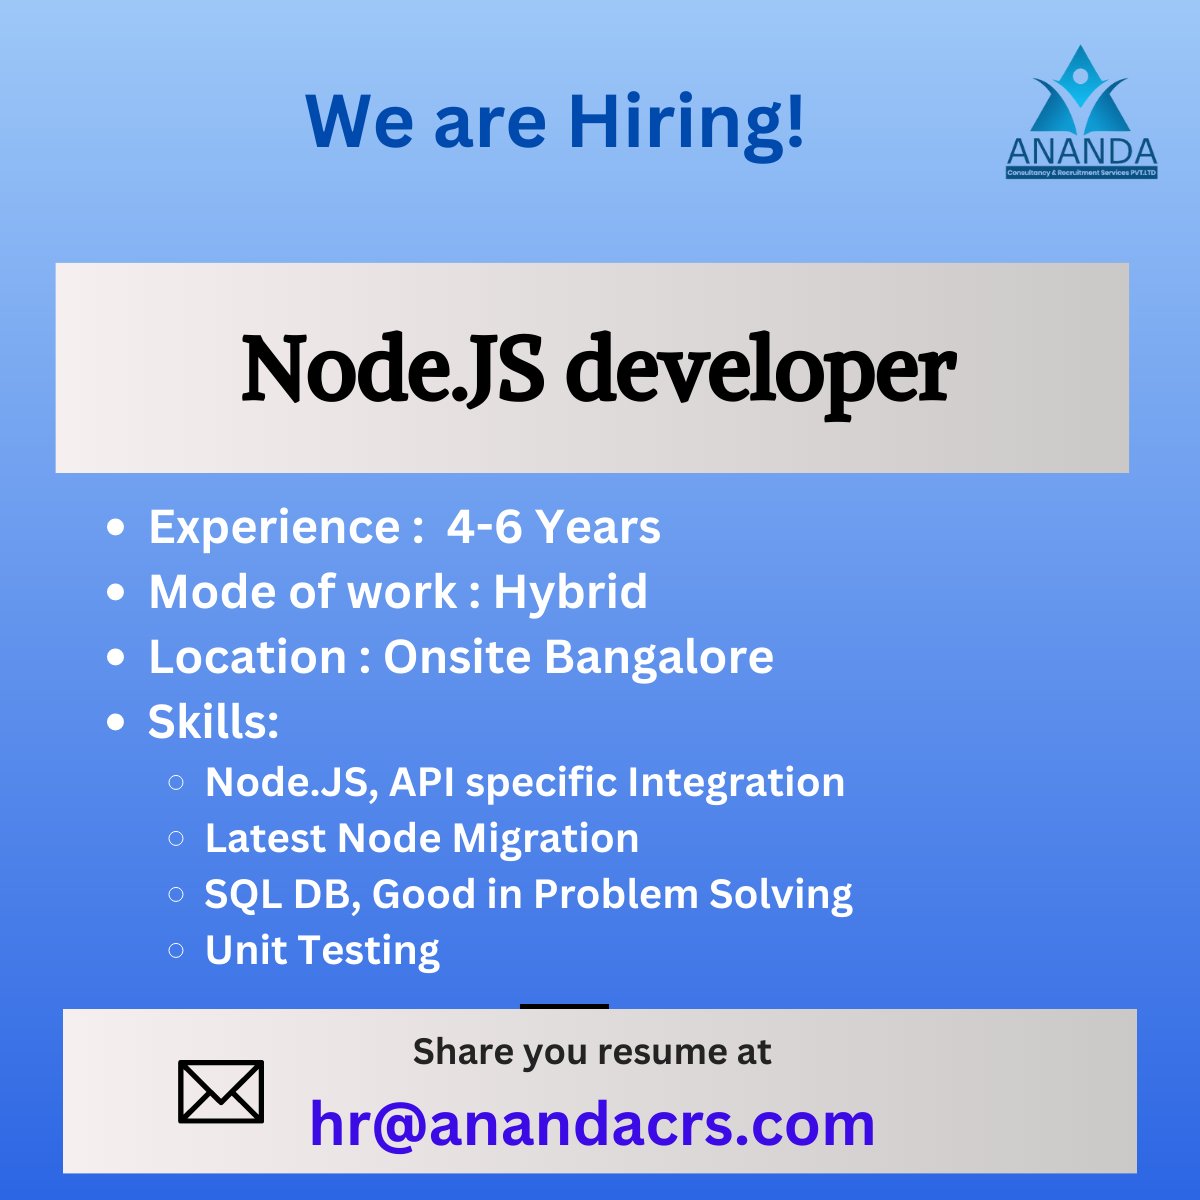 We are Hiring!

#nodejsdevelopers #nodejsdeveloper #nodejs #nodejsjobs #bangalorejobs #bengalurujobs #apiintegration #sqldatabase #unittesting #hiring #experience #onsite #onsitejob #bangalorejobs #bangaloreitjobs #bangalore #fulltime #fulltimejobs